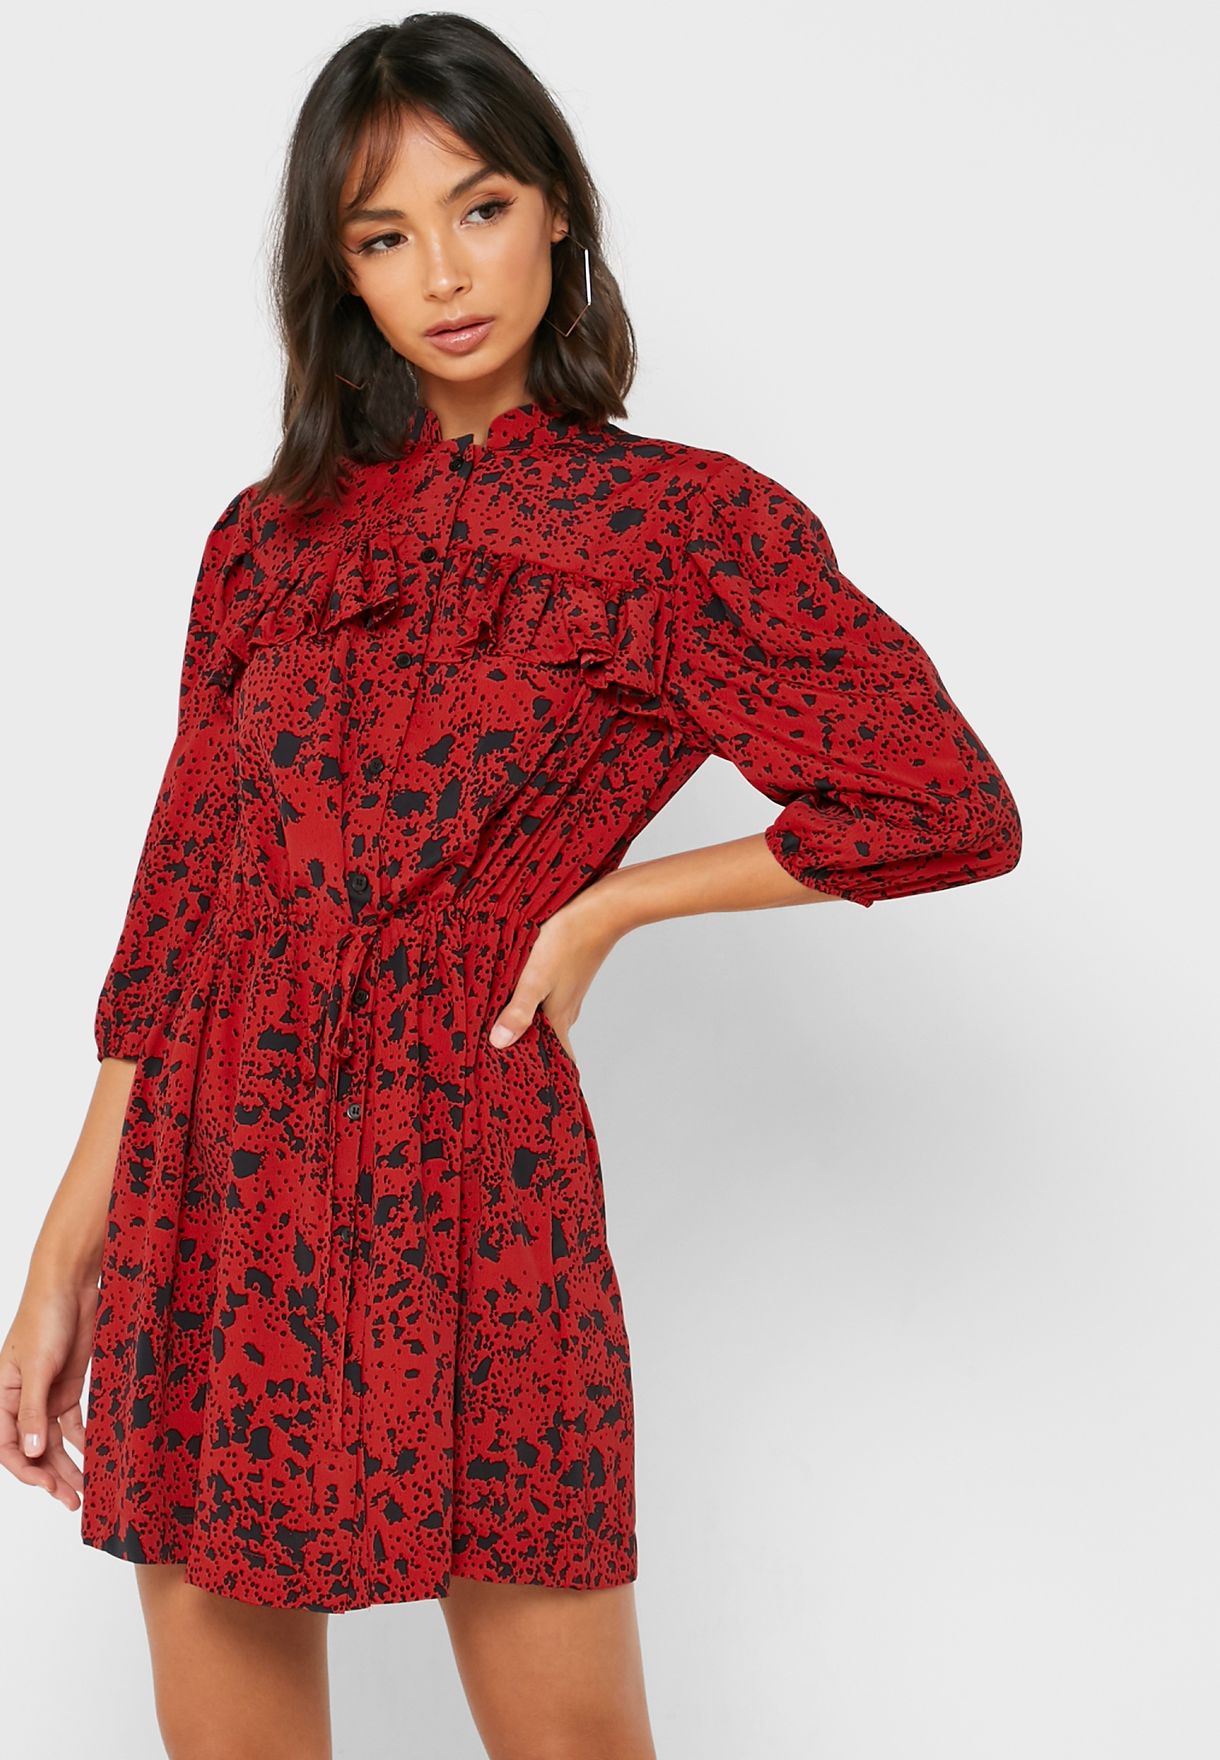 topshop red leopard print dress